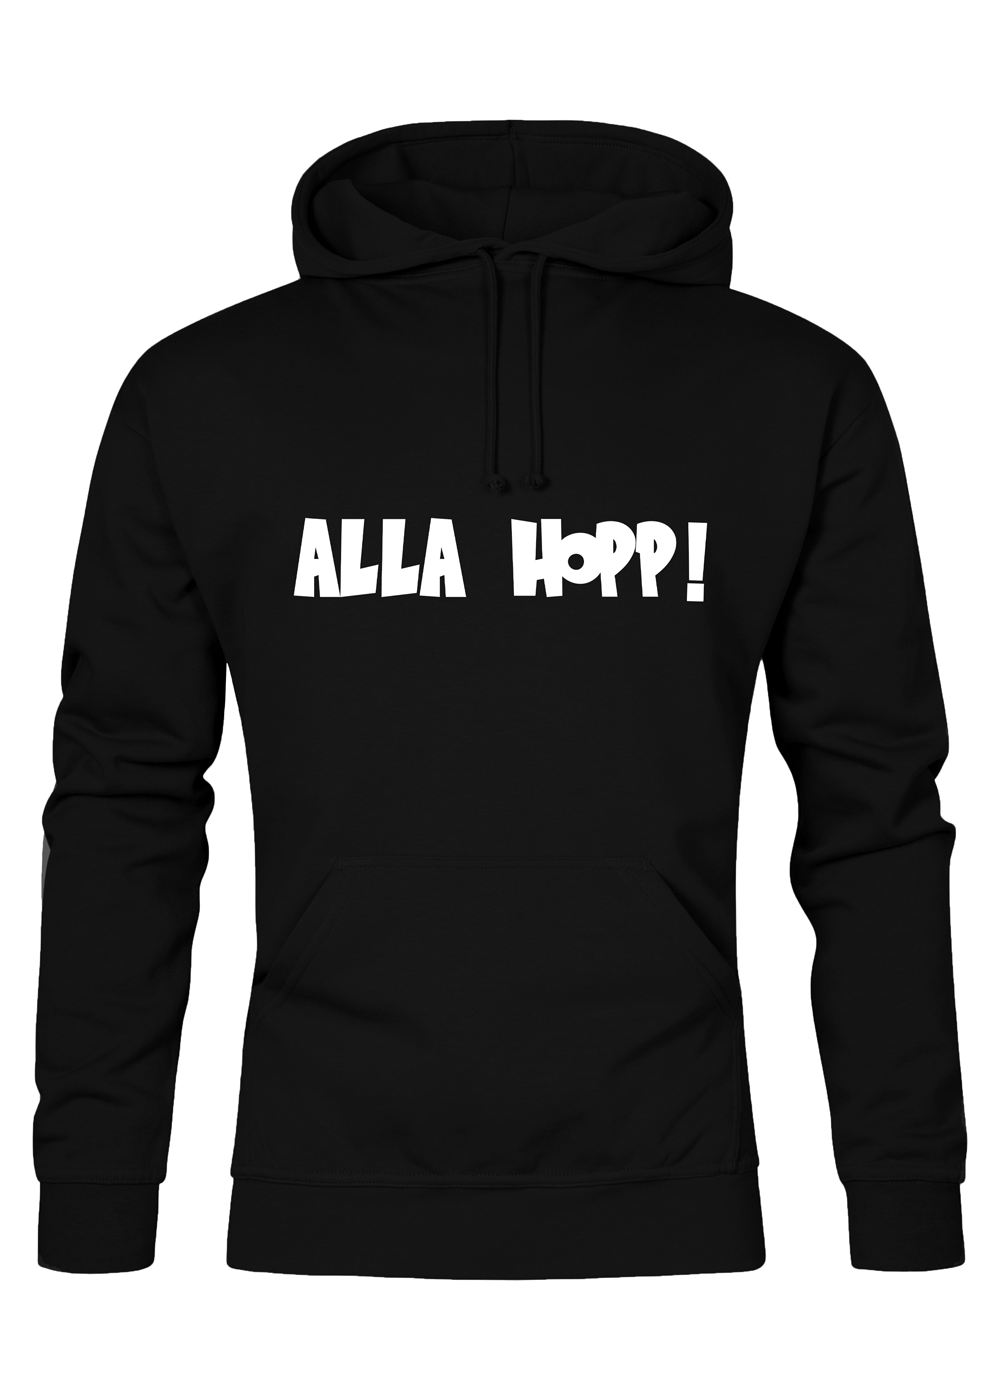 Alla Hopp - Männer Hoodie - Unisex